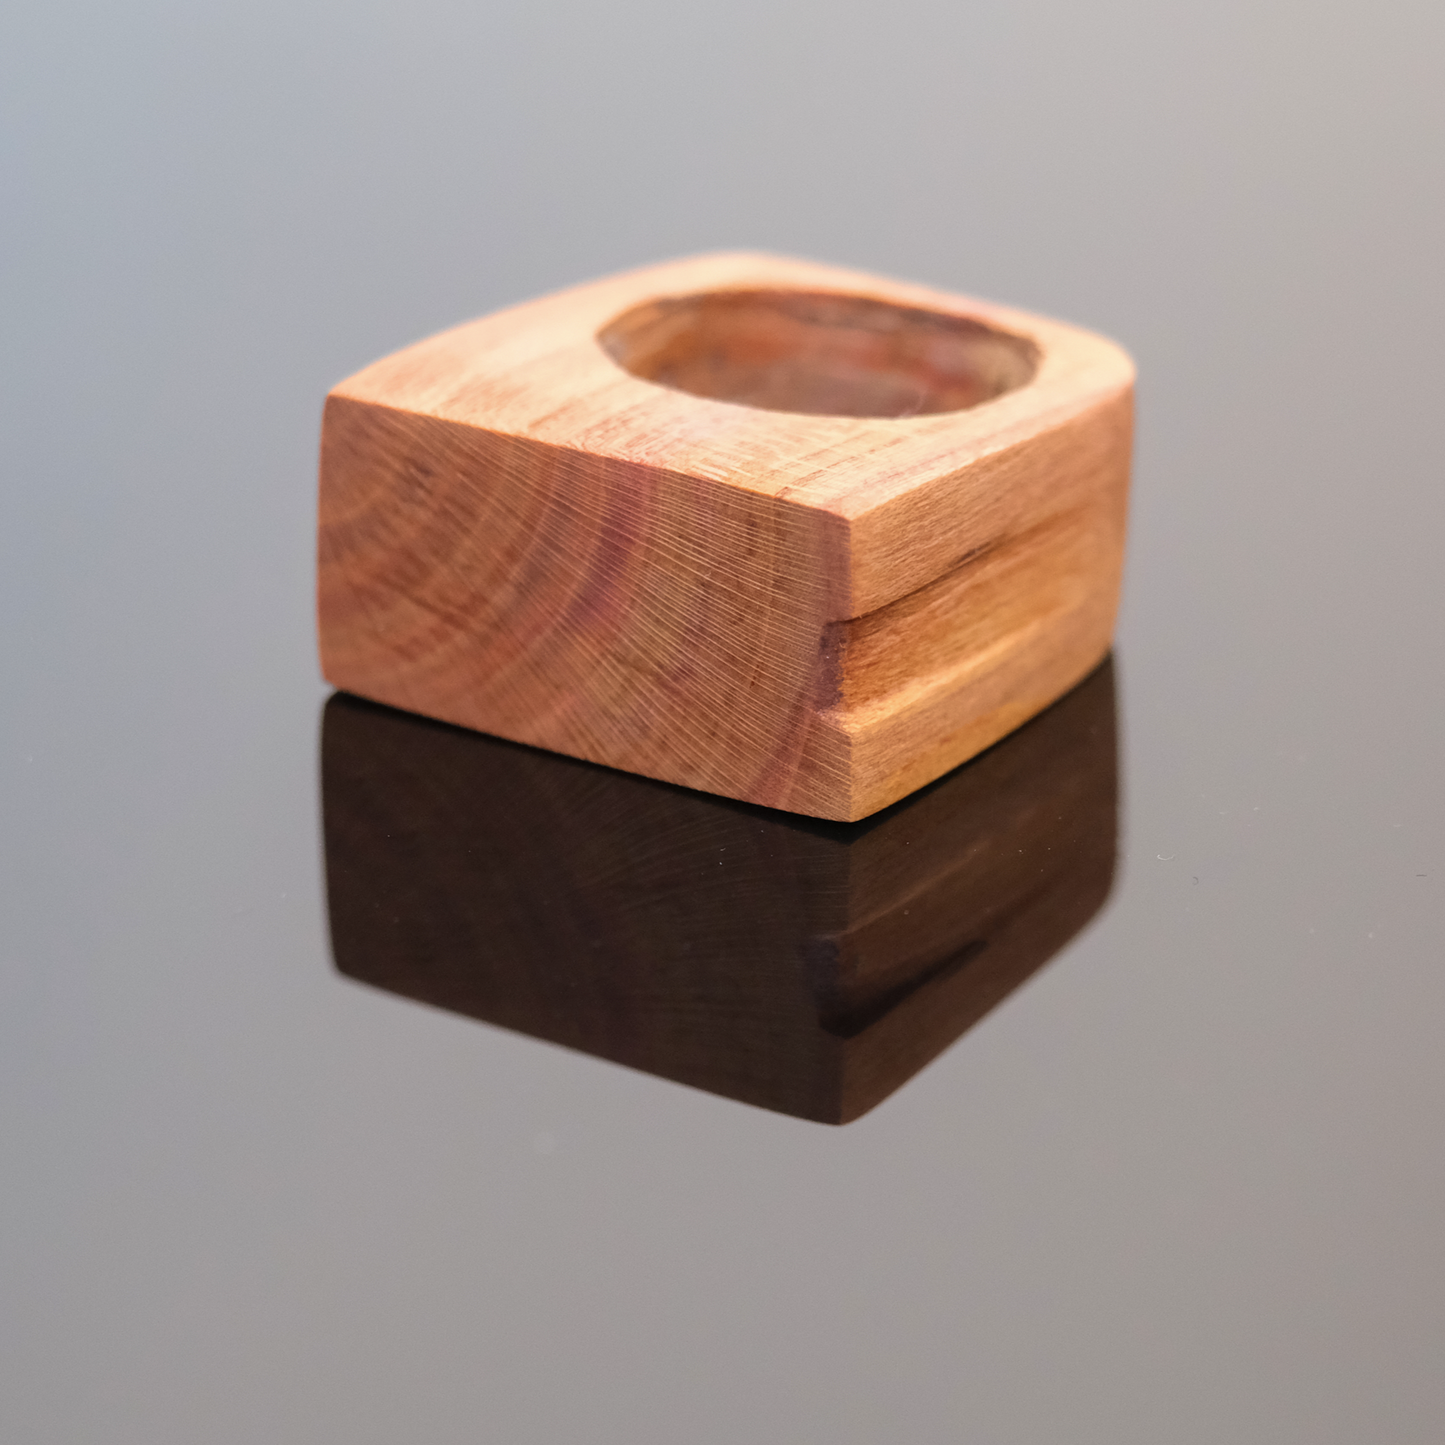 Radiate - Japanese Plum Wood Ring by Nicholas Howlett